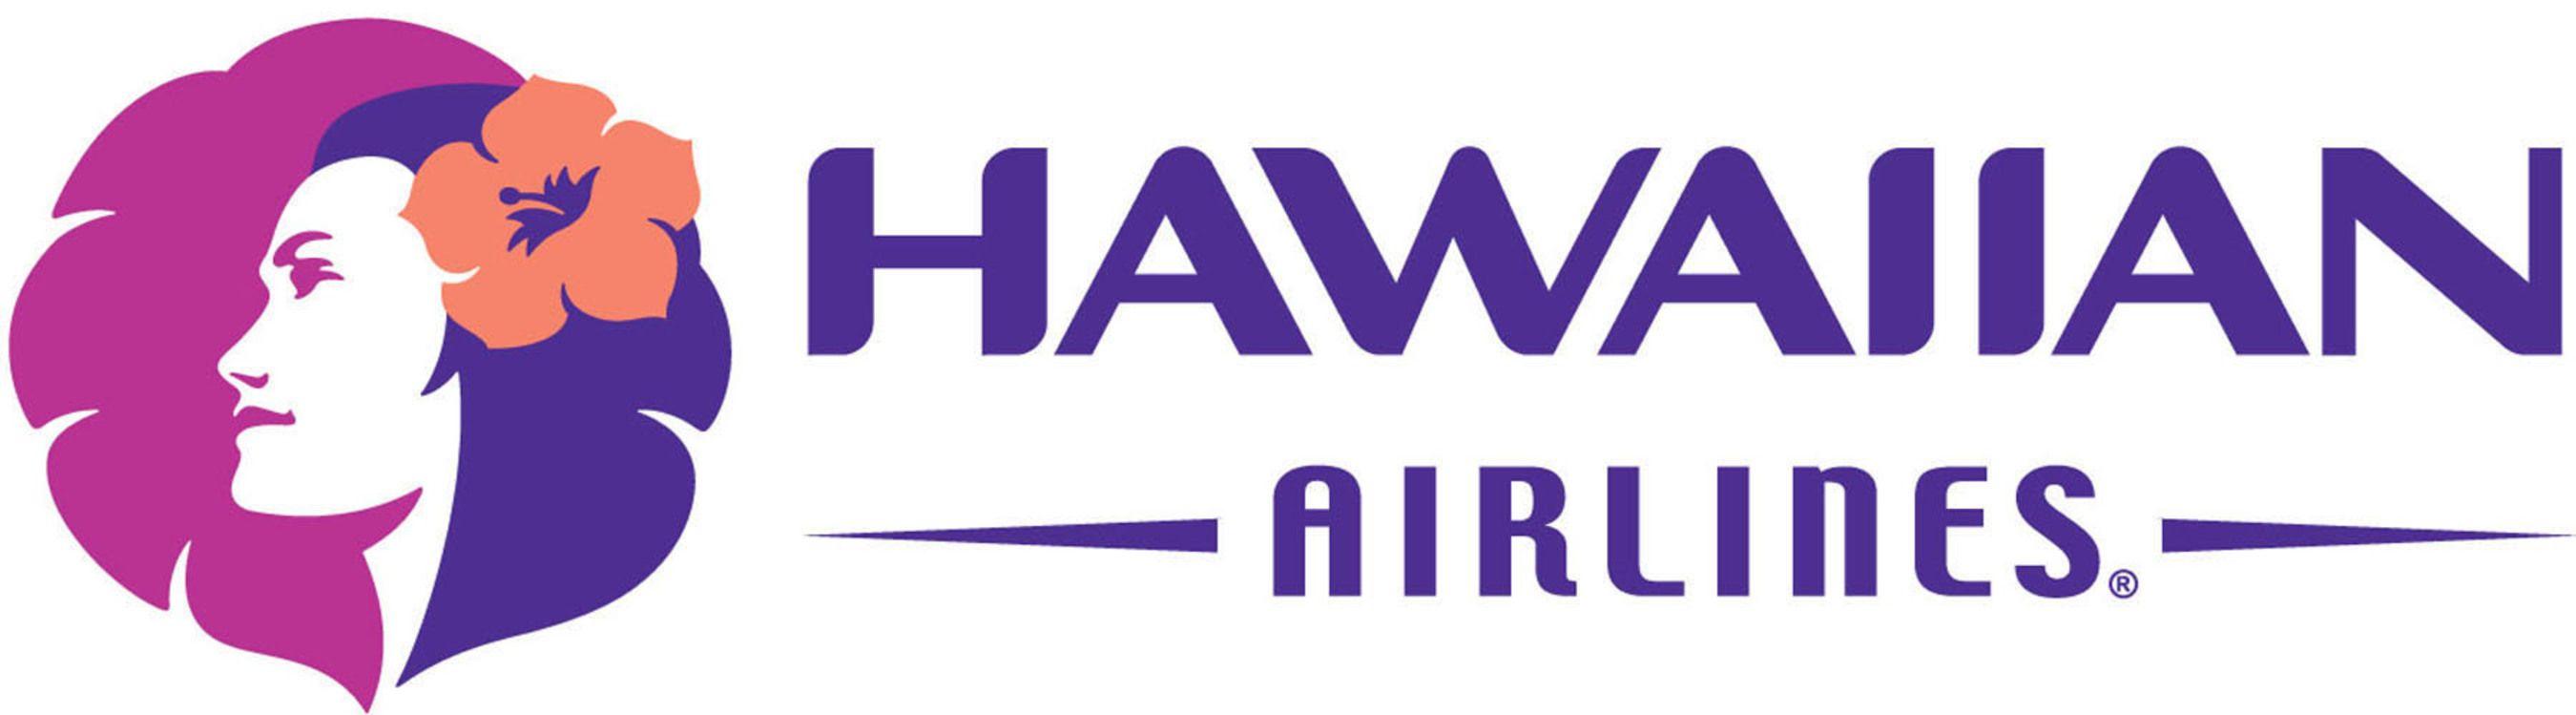 Hawaiian Logo - Hawaiian Holdings Announces Investor Day Presentation Webcast